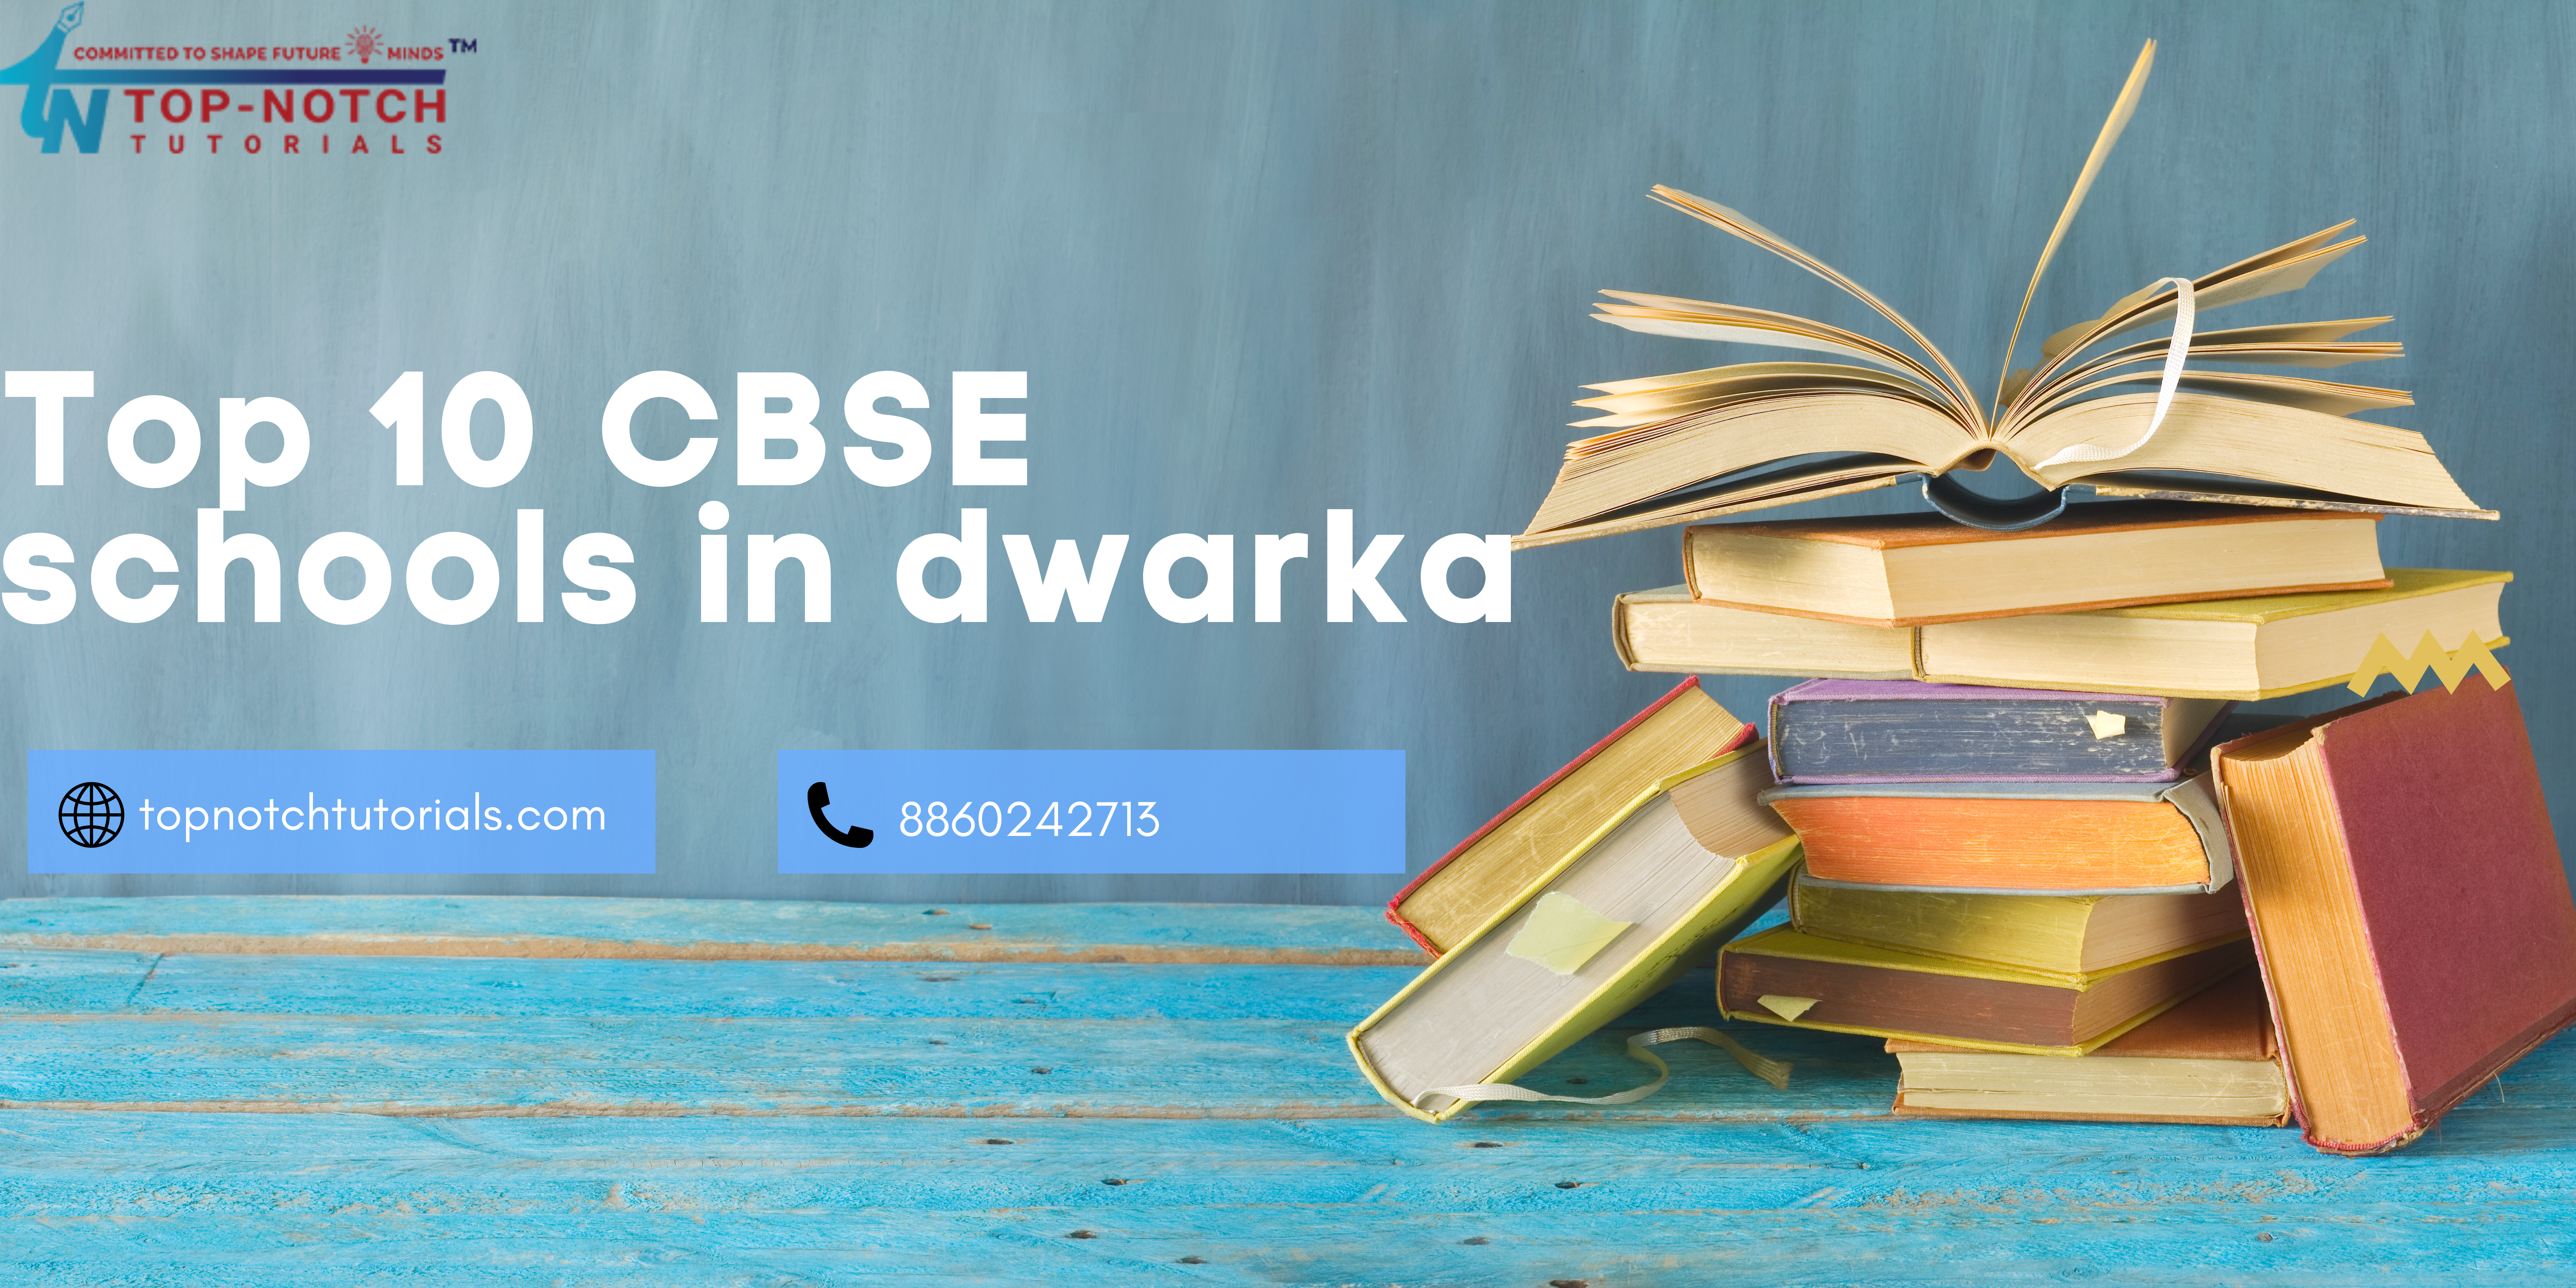 Top 10 CBSE schools in dwarka